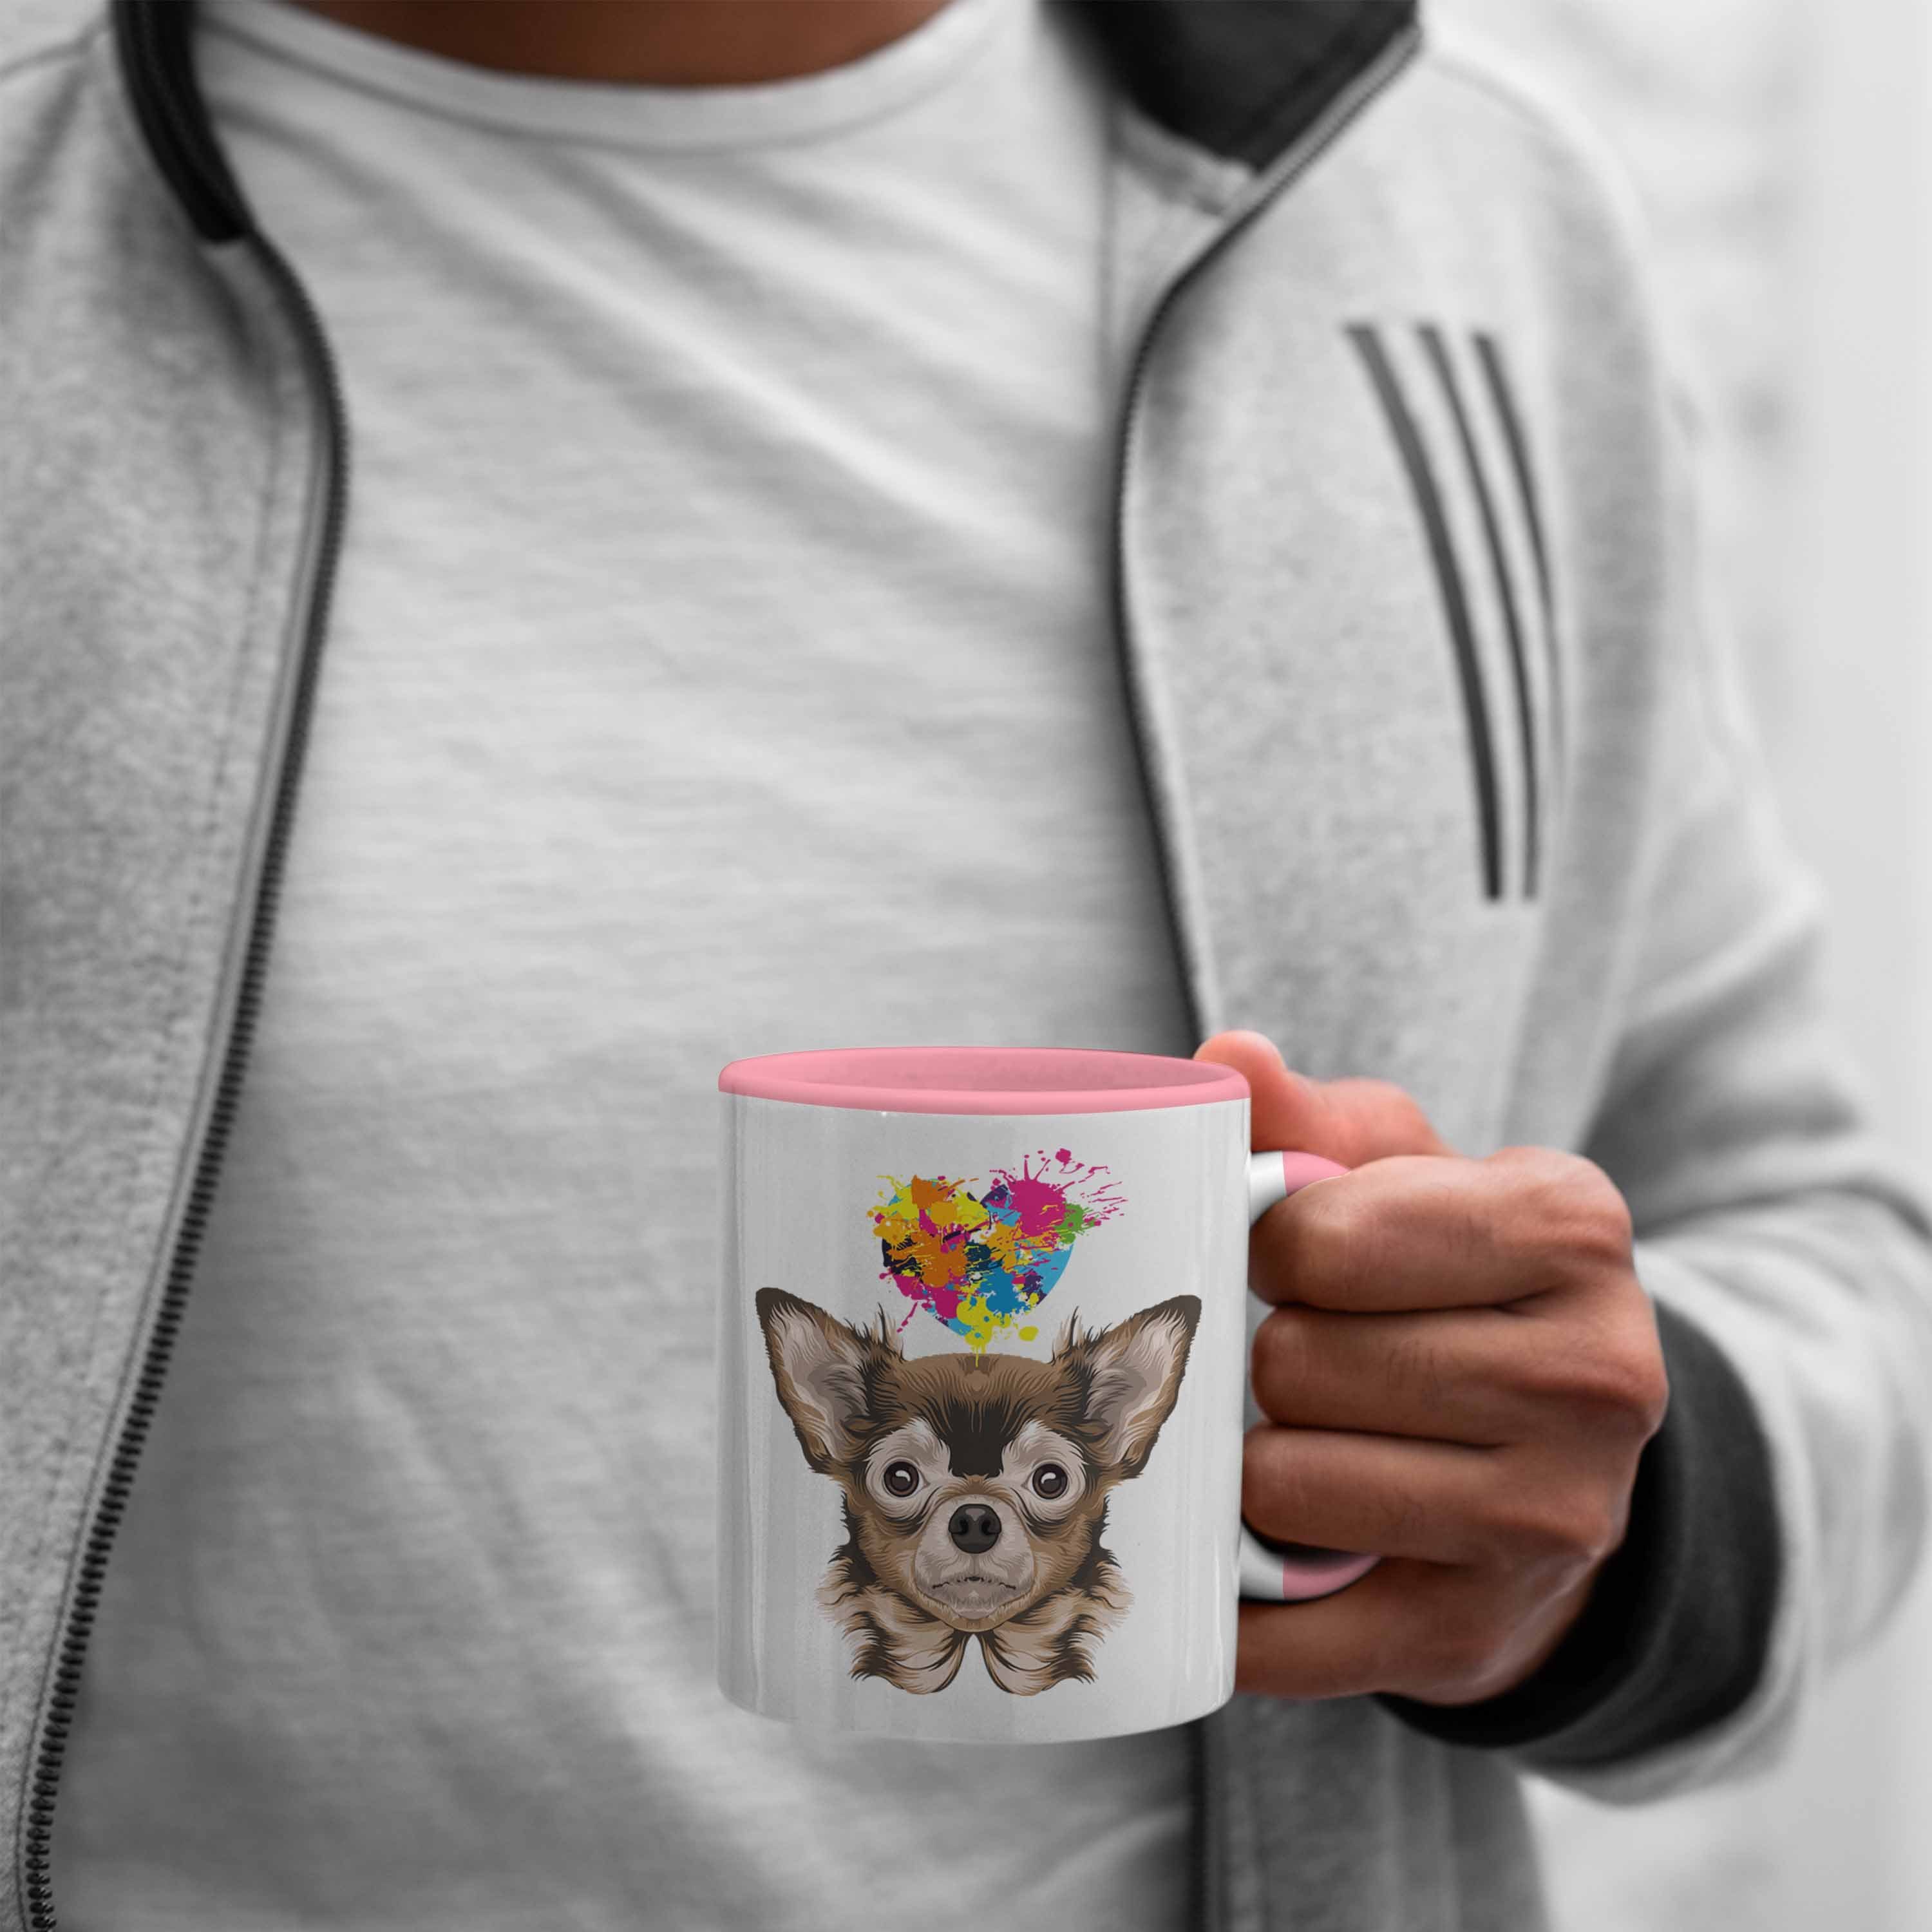 Mama Besitzer Rosa Chihuhahua Her Geschenkidee Trendation Kaffee-Becher Tasse Tasse Frauchen